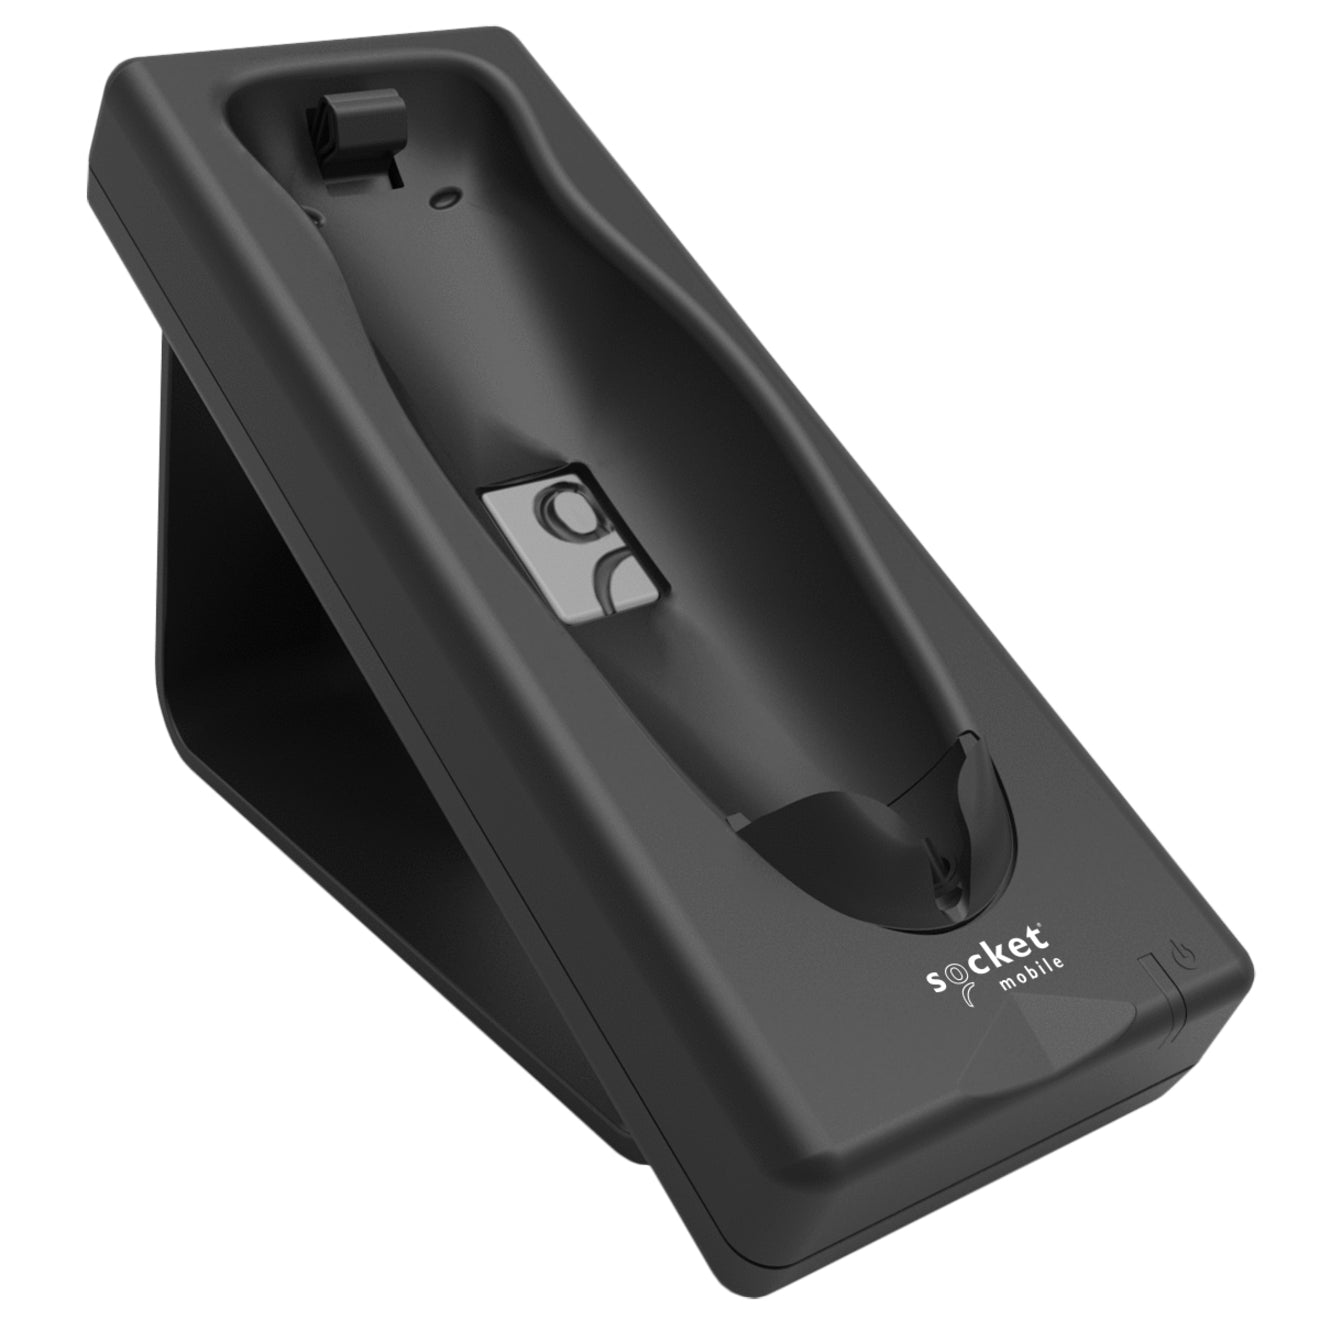 Socket 移动 AC4102-1695 充电座，适用于 DuraScan 条形码扫描仪，黑色 - 便捷的对接和充电解决方案 Socket 移动.品牌名称翻译:插座 移动